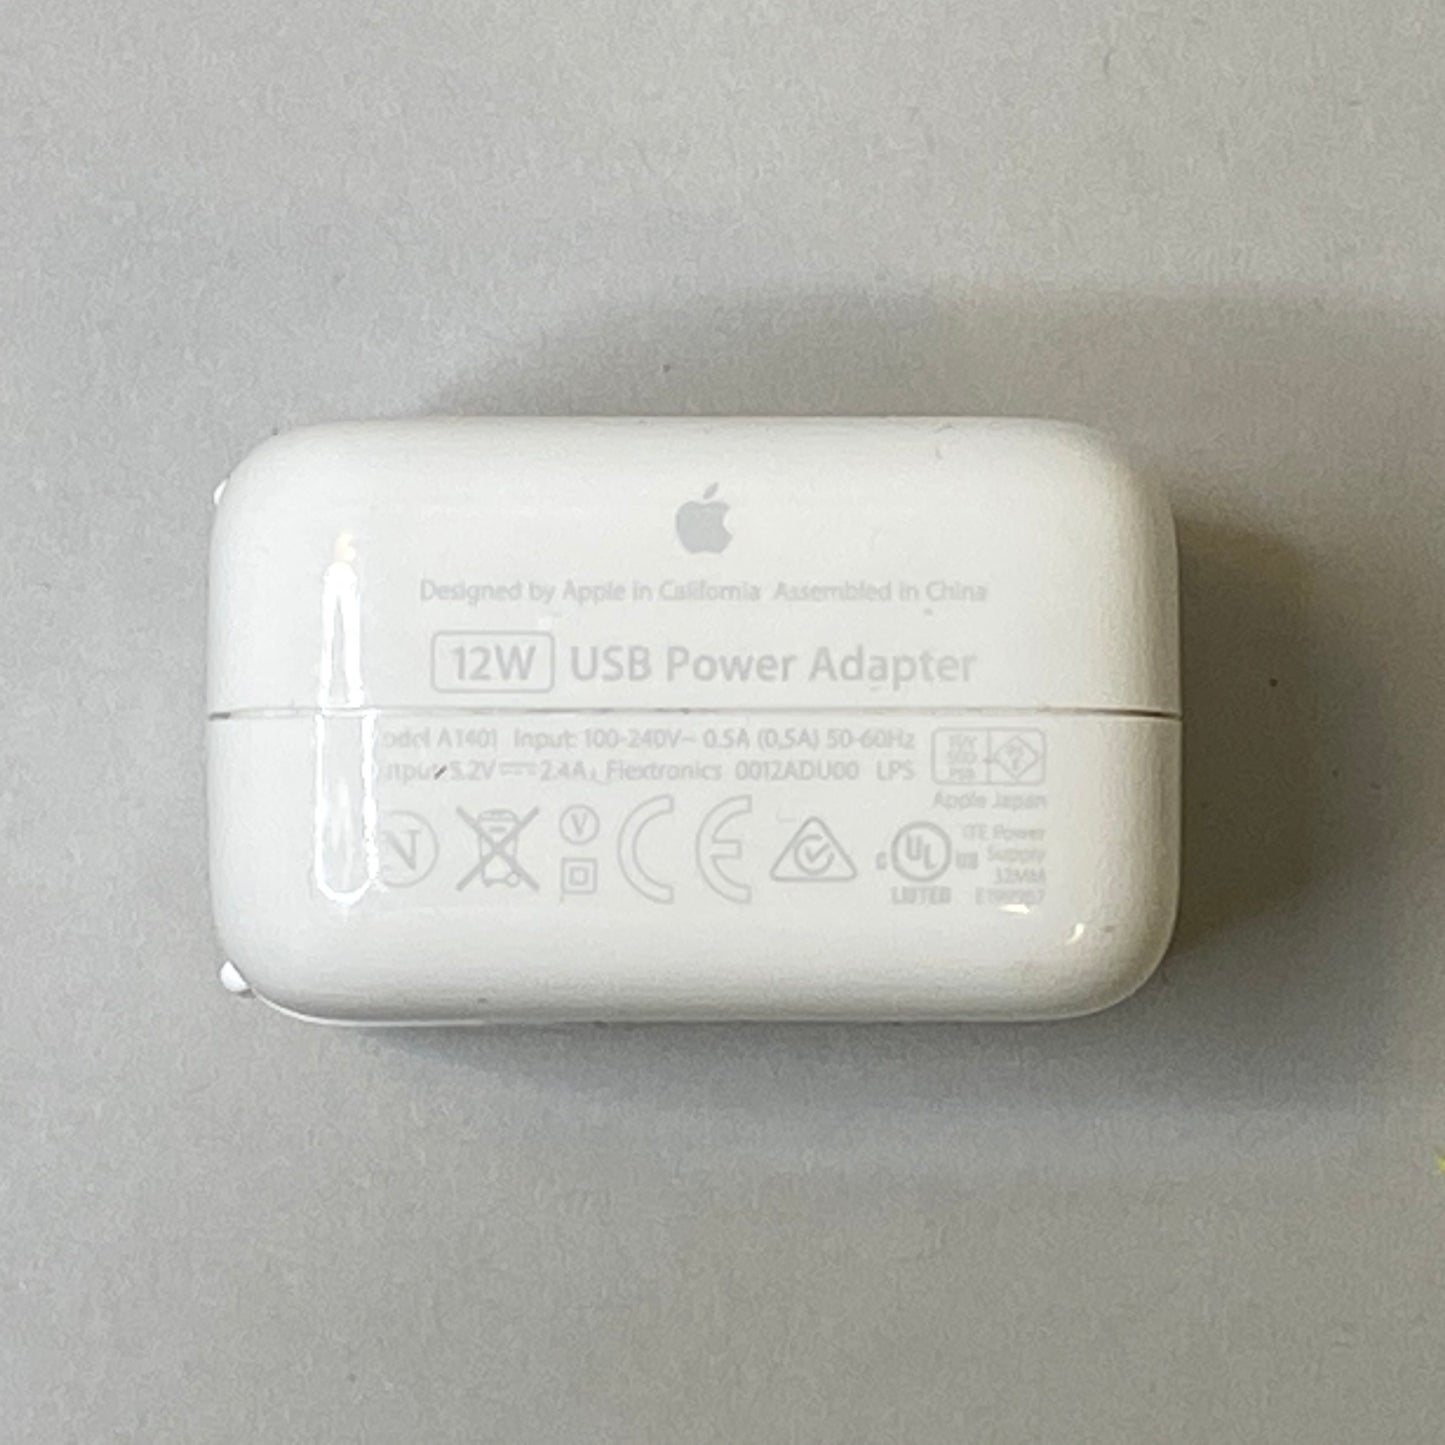 Genuine Apple for USB – Adapter Charging Massapequa PayMore 12W iPad Power